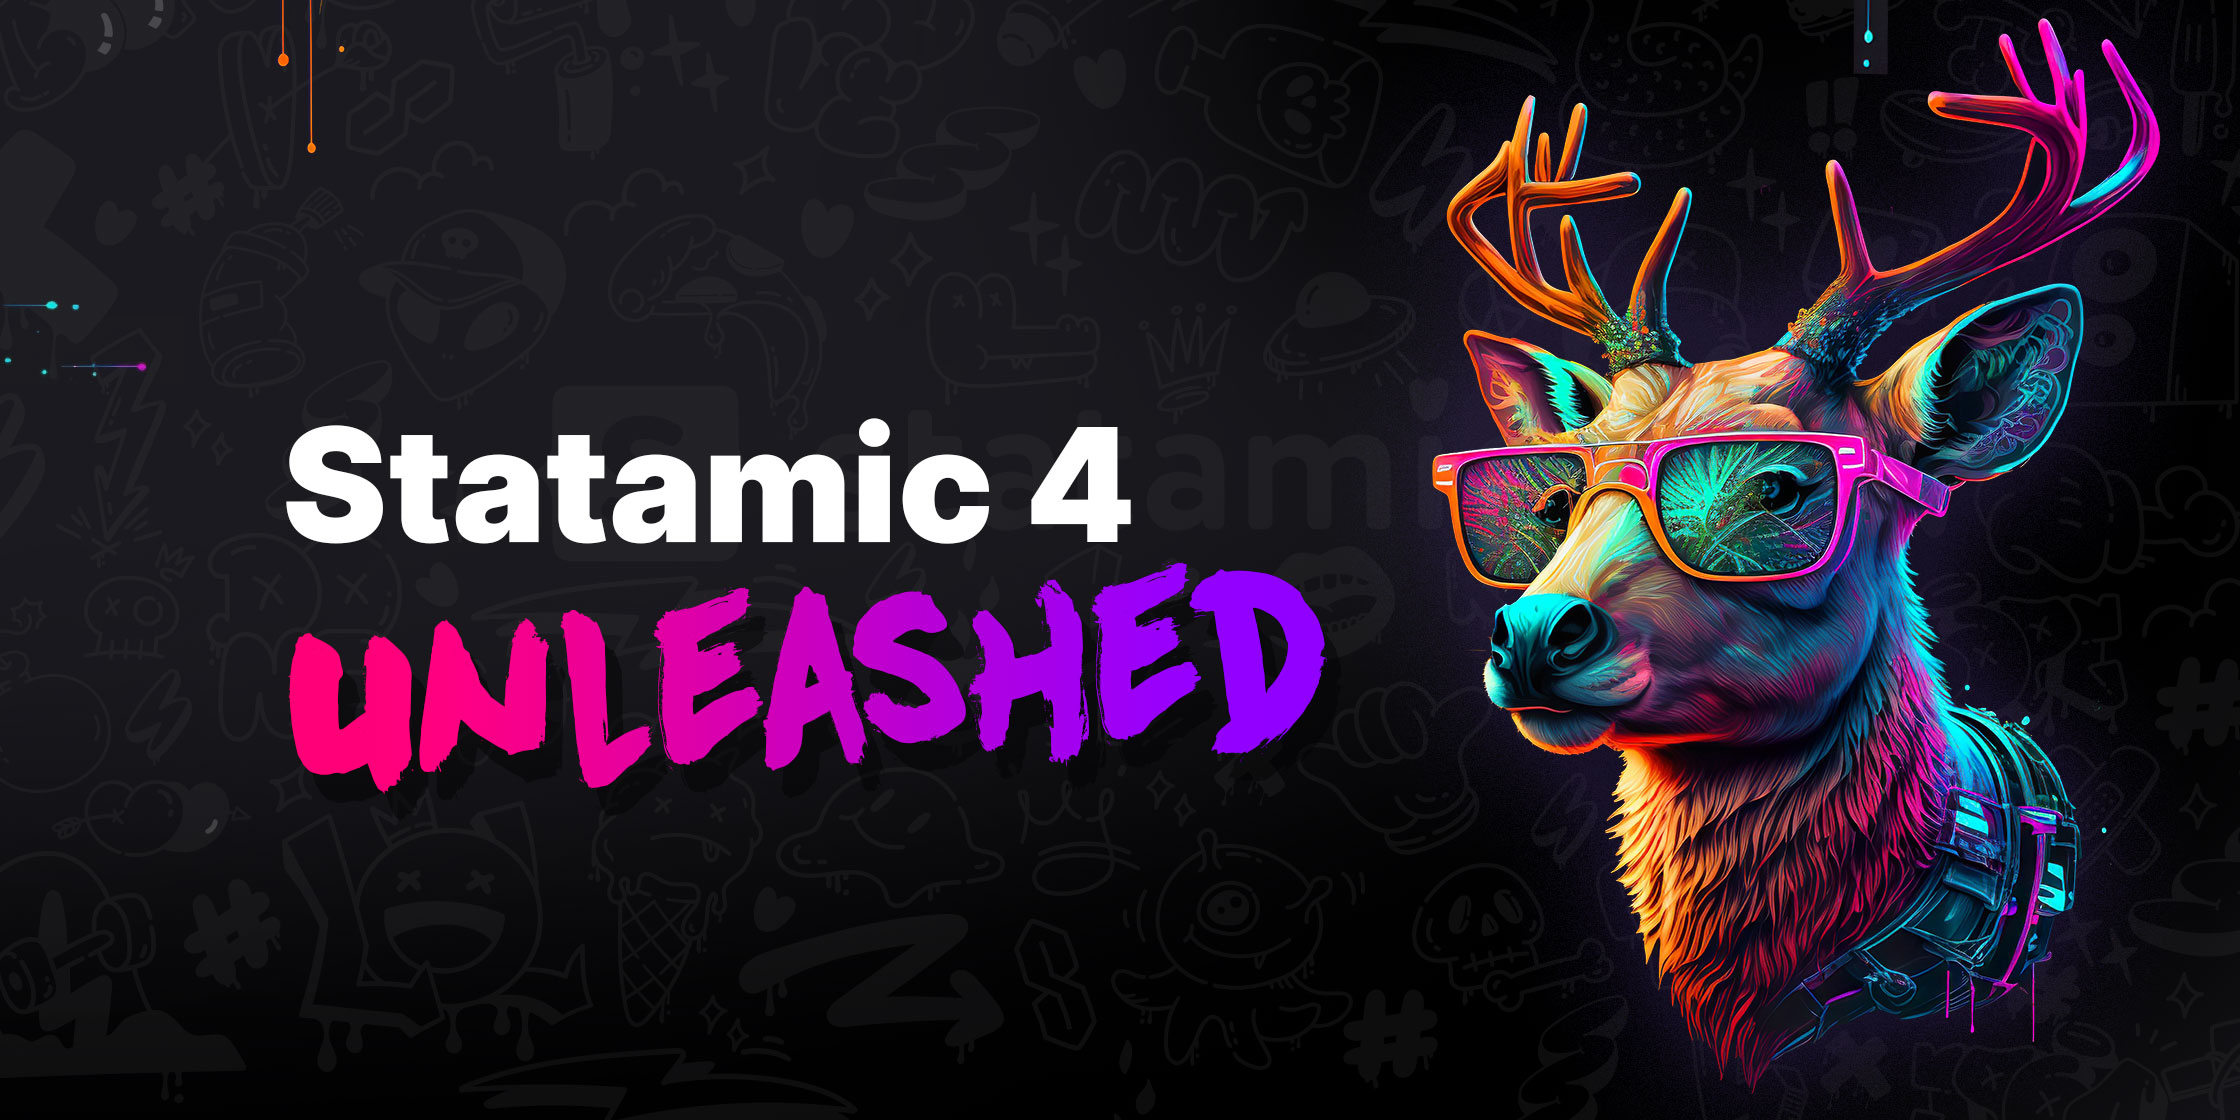 Statamic v4 graphic with Buckshot Thunderstride, Statamic's new mascot